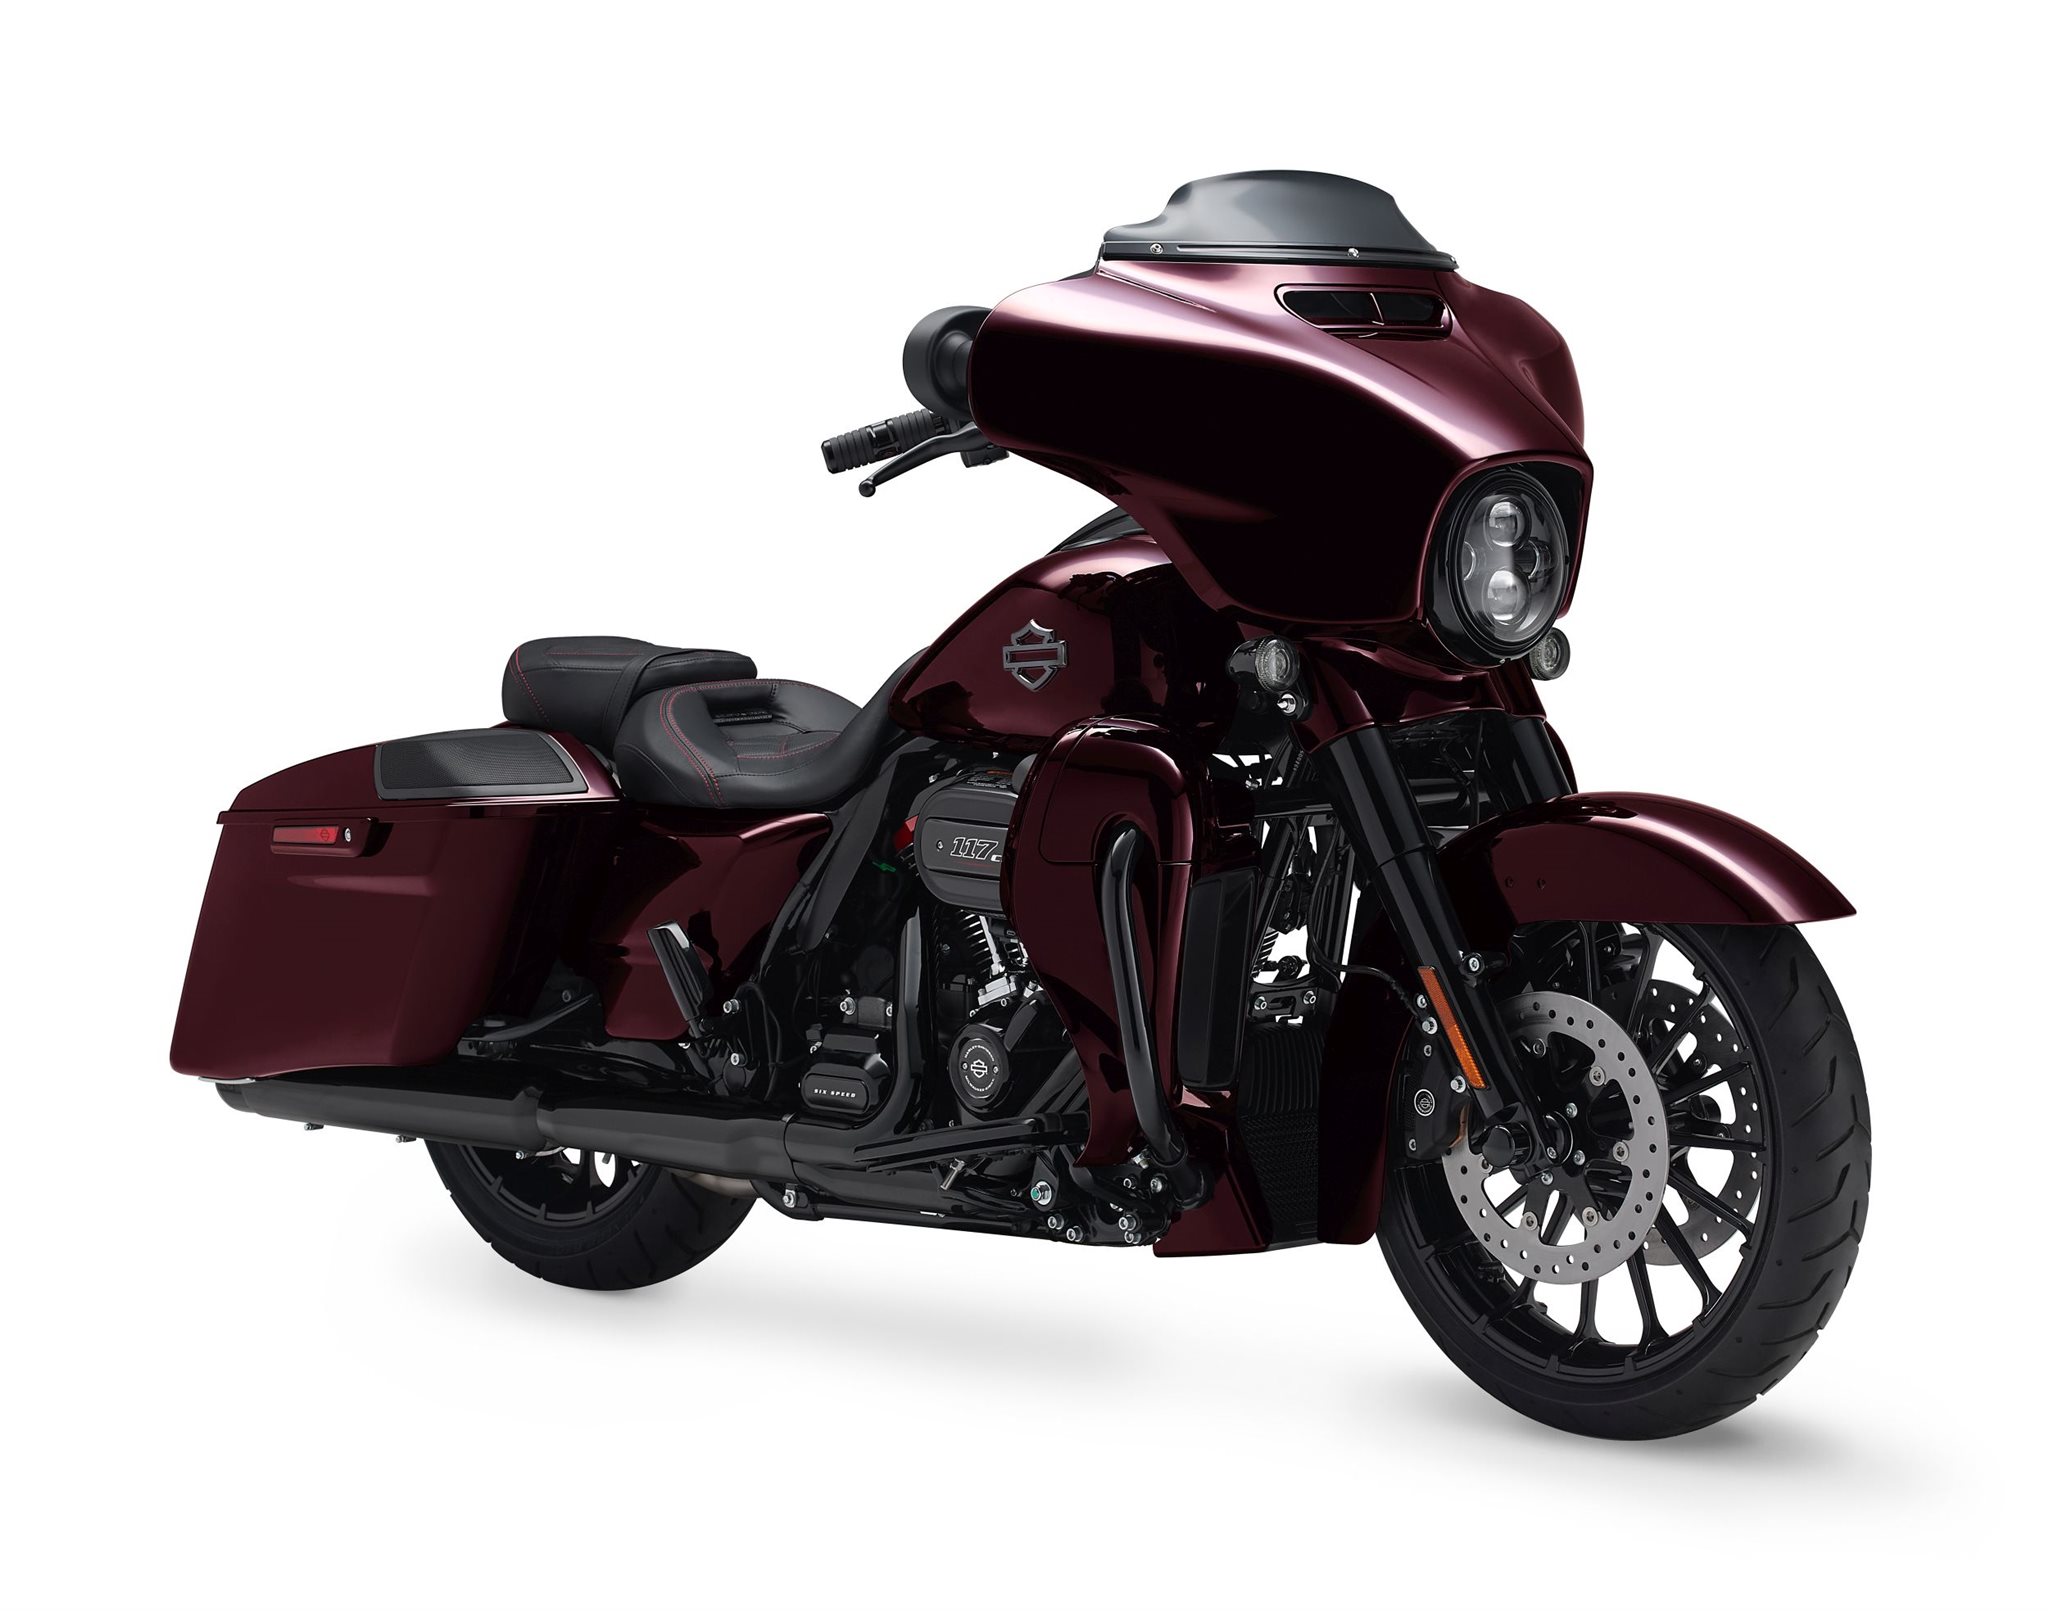 Motorrad Vergleich Harley Davidson Cvo Street Glide Flhxse 2019 Vs Indian Chief 2019